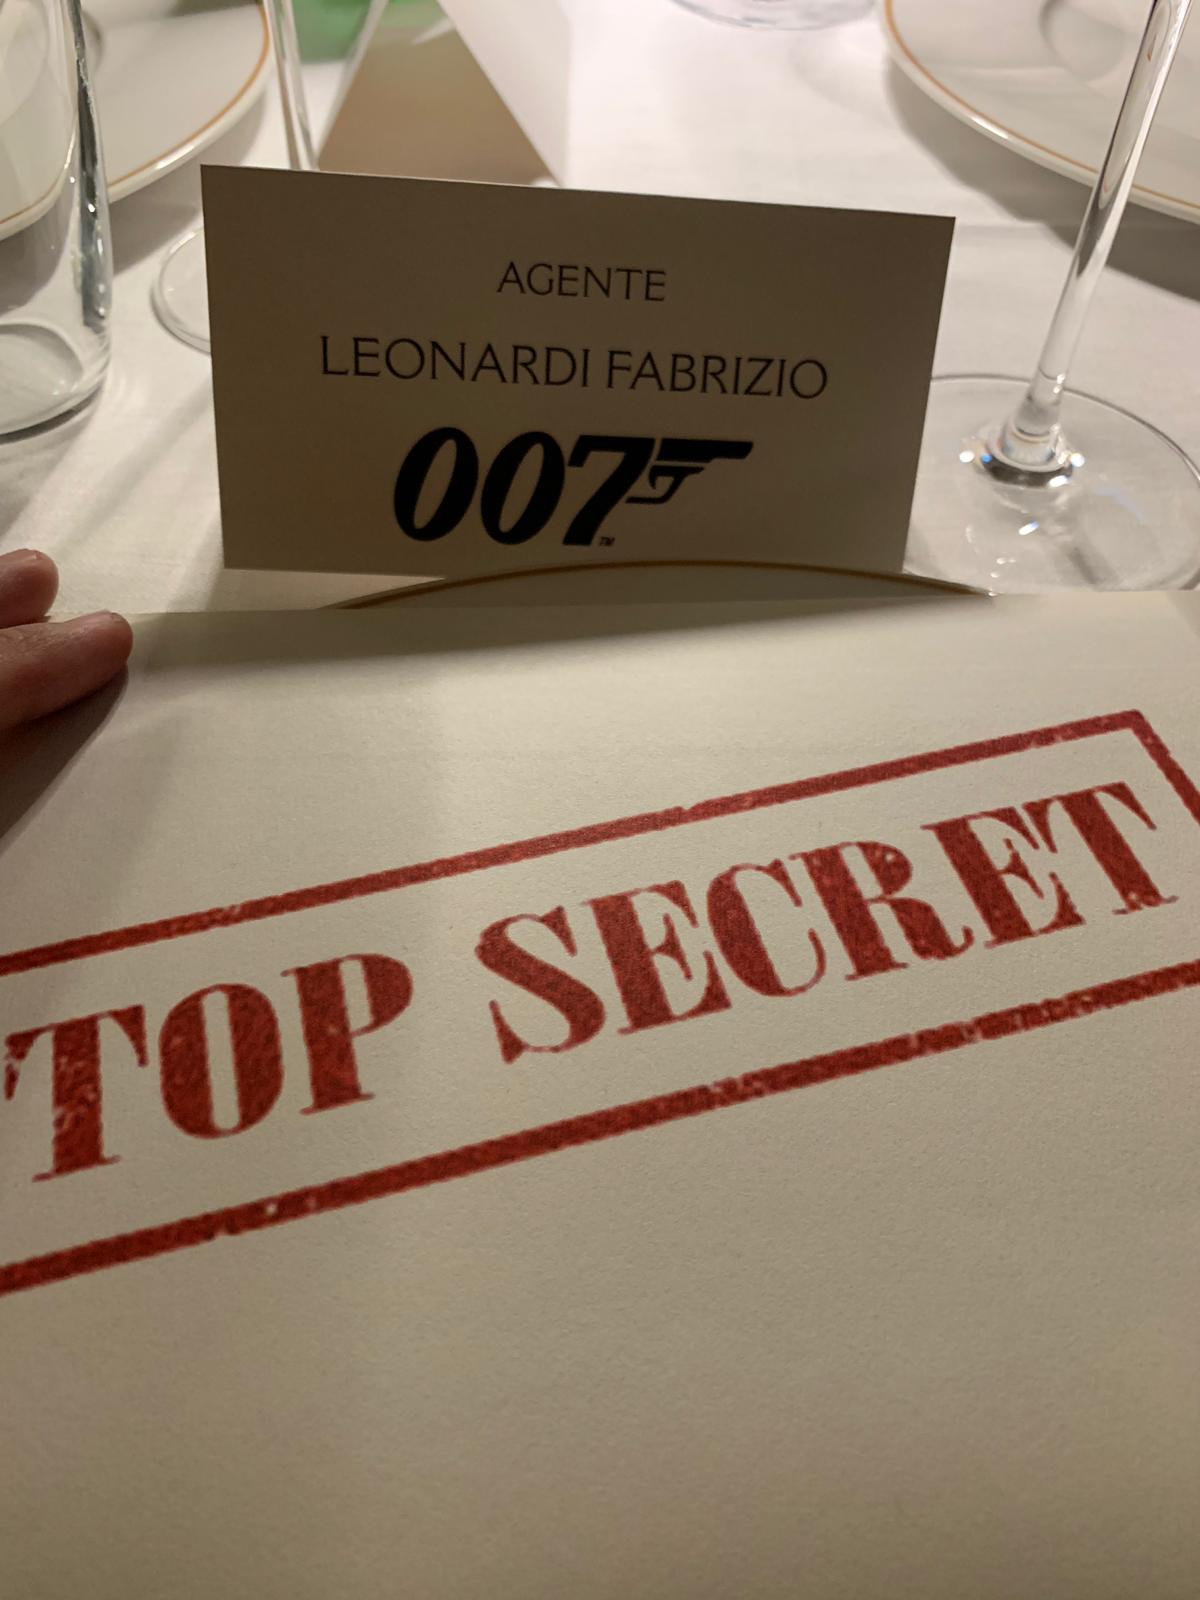 James Bond Damedeo - Mise en place